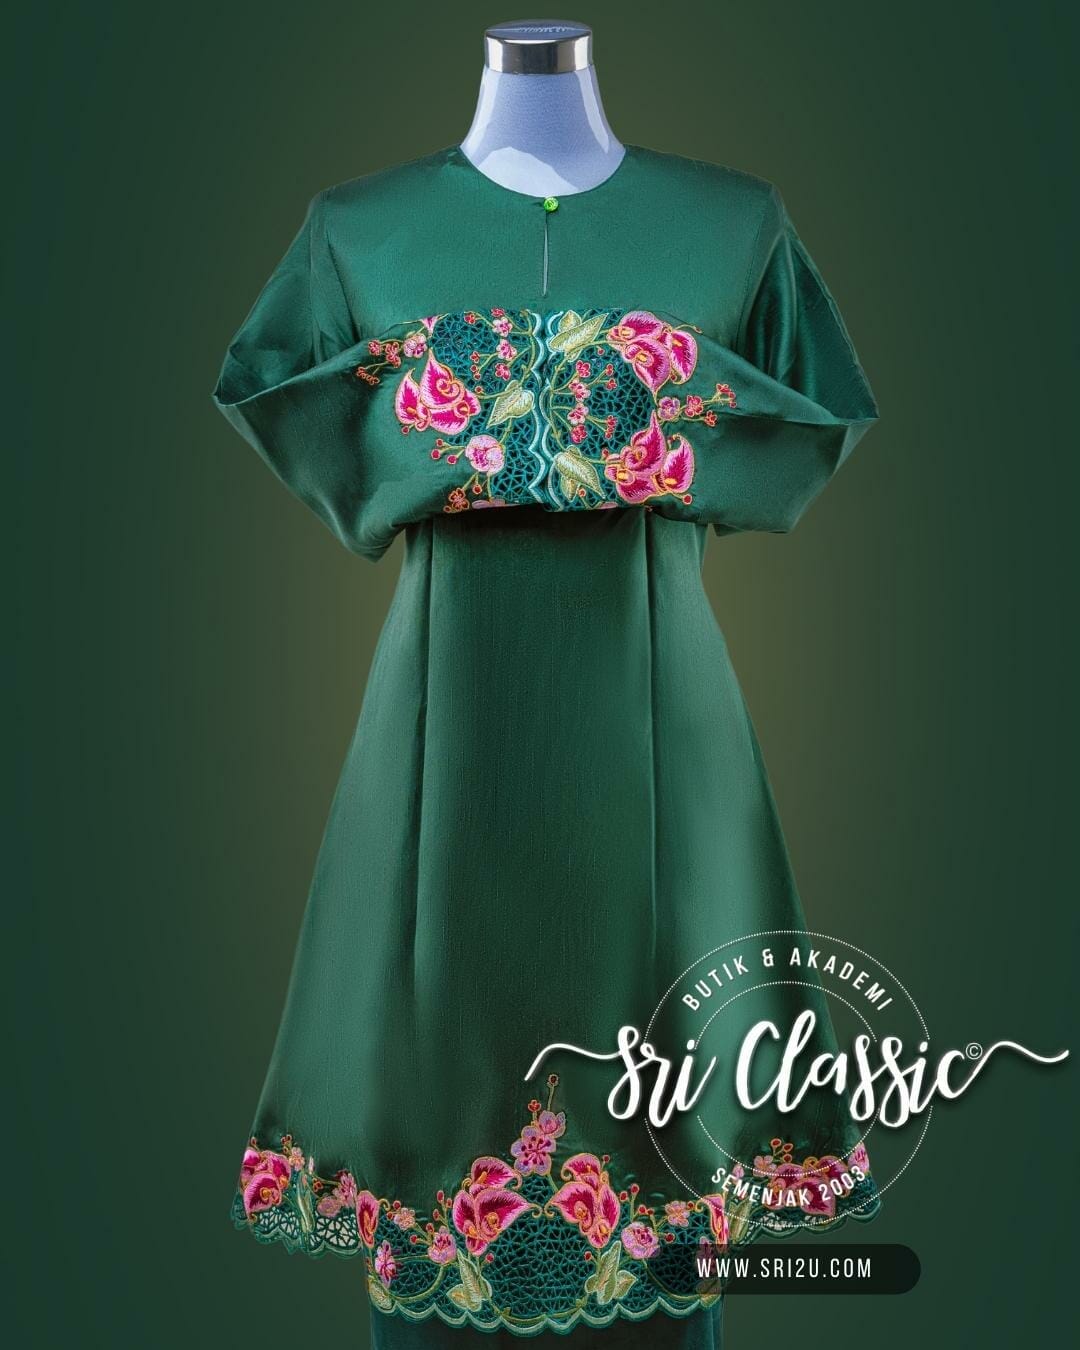 Sulam Baju Kurung Moden Princess Cut Motif Bunga Sakura Dan Lily Clara: Keanggunan dan Keunikan Sulaman Goyang Kerawang di Butik Sri Classic